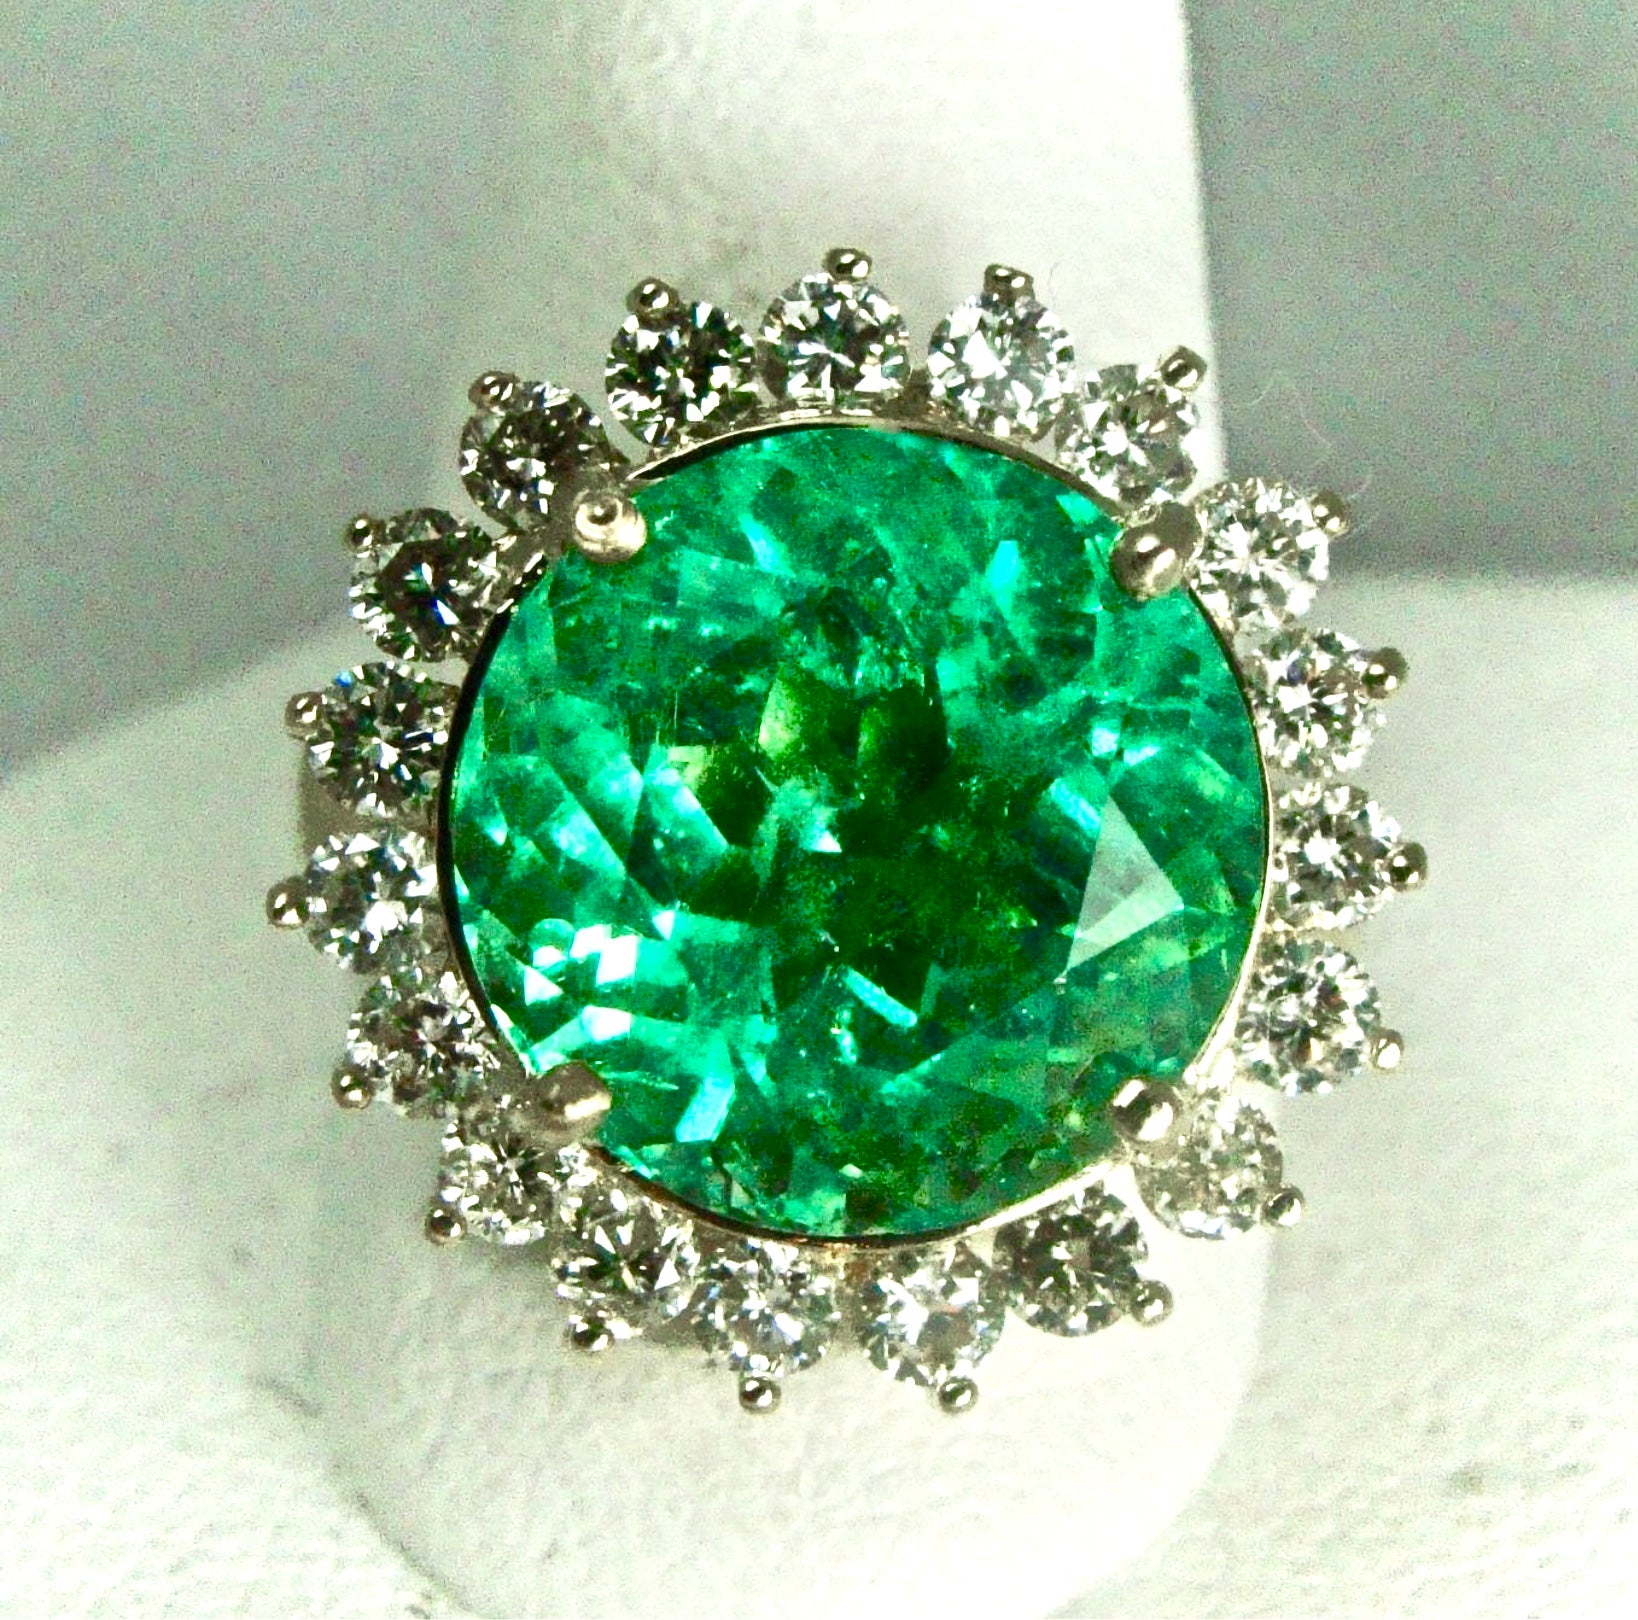 9.65 Carat Fine Natural Round Colombian Emerald Diamond Ring 18K